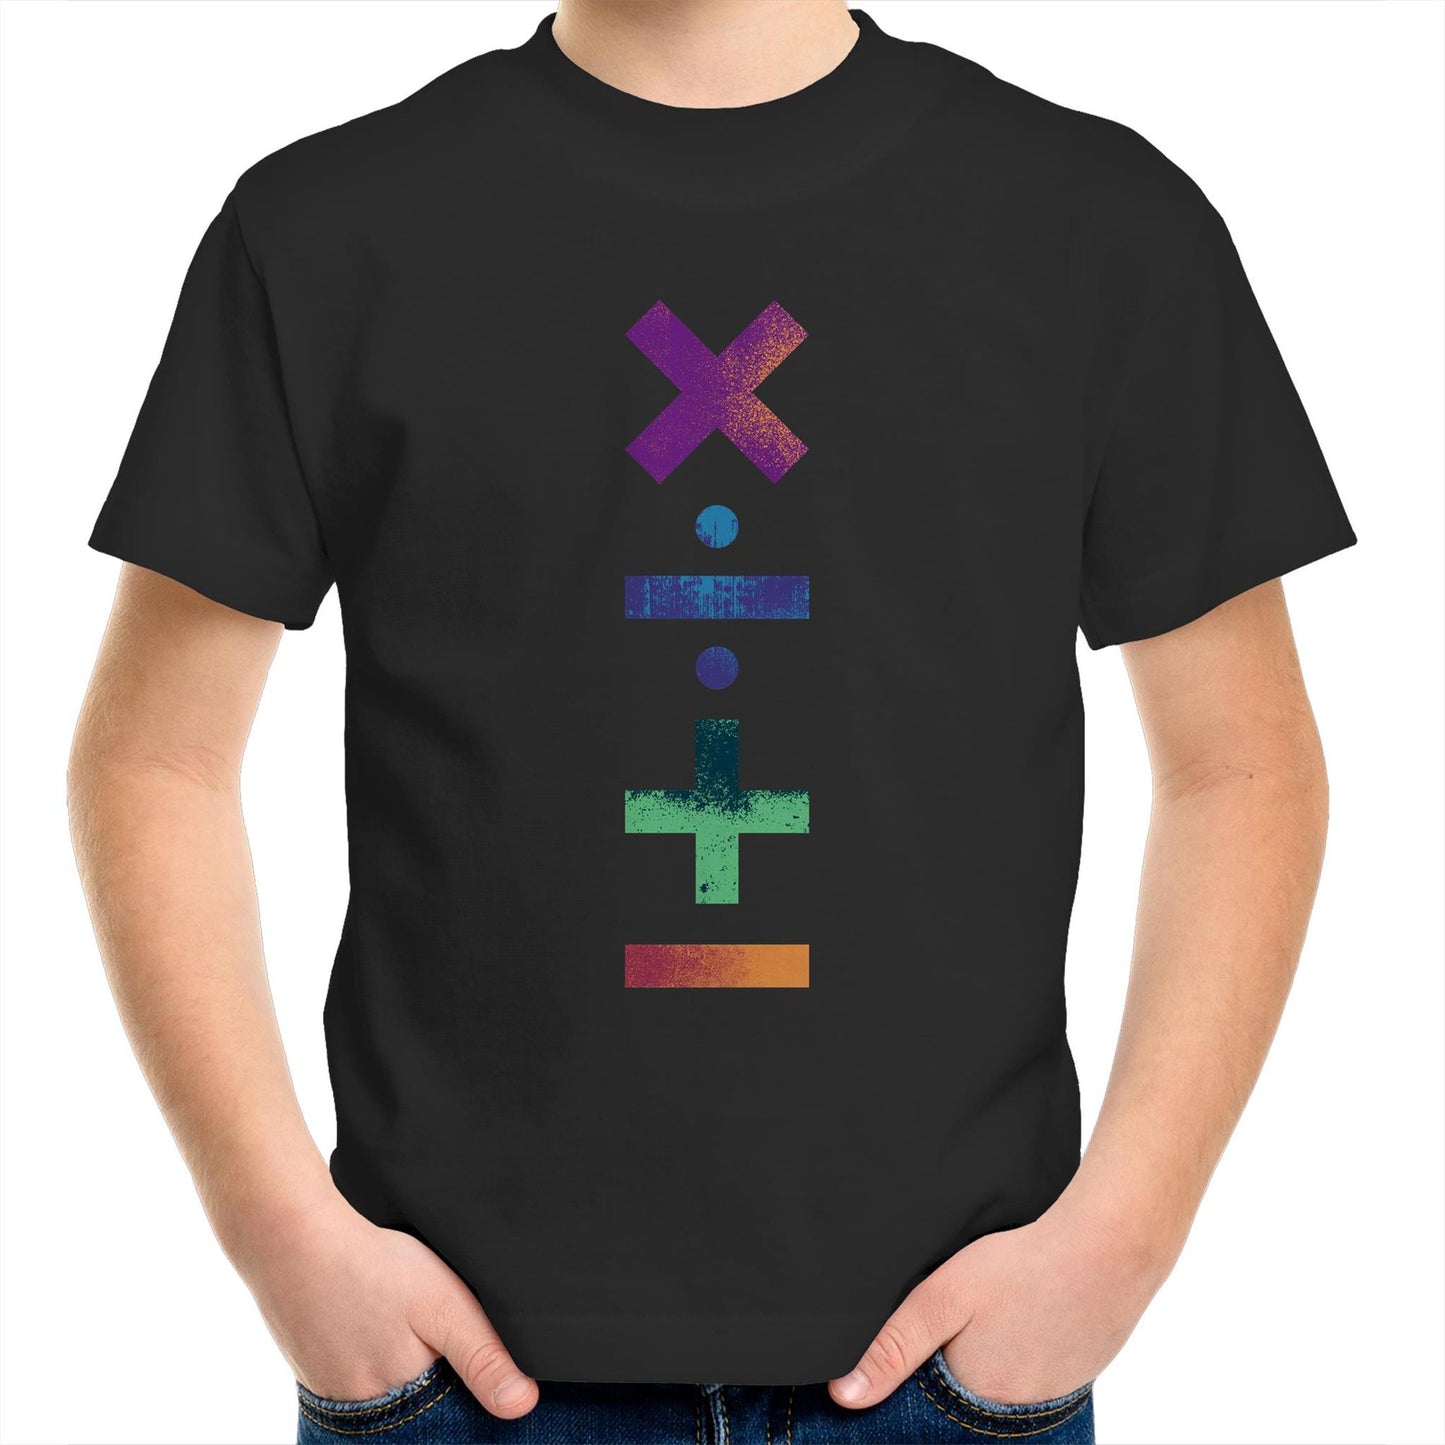 Maths Symbols - Kids Youth Crew T-Shirt Black Kids Youth T-shirt Maths Science